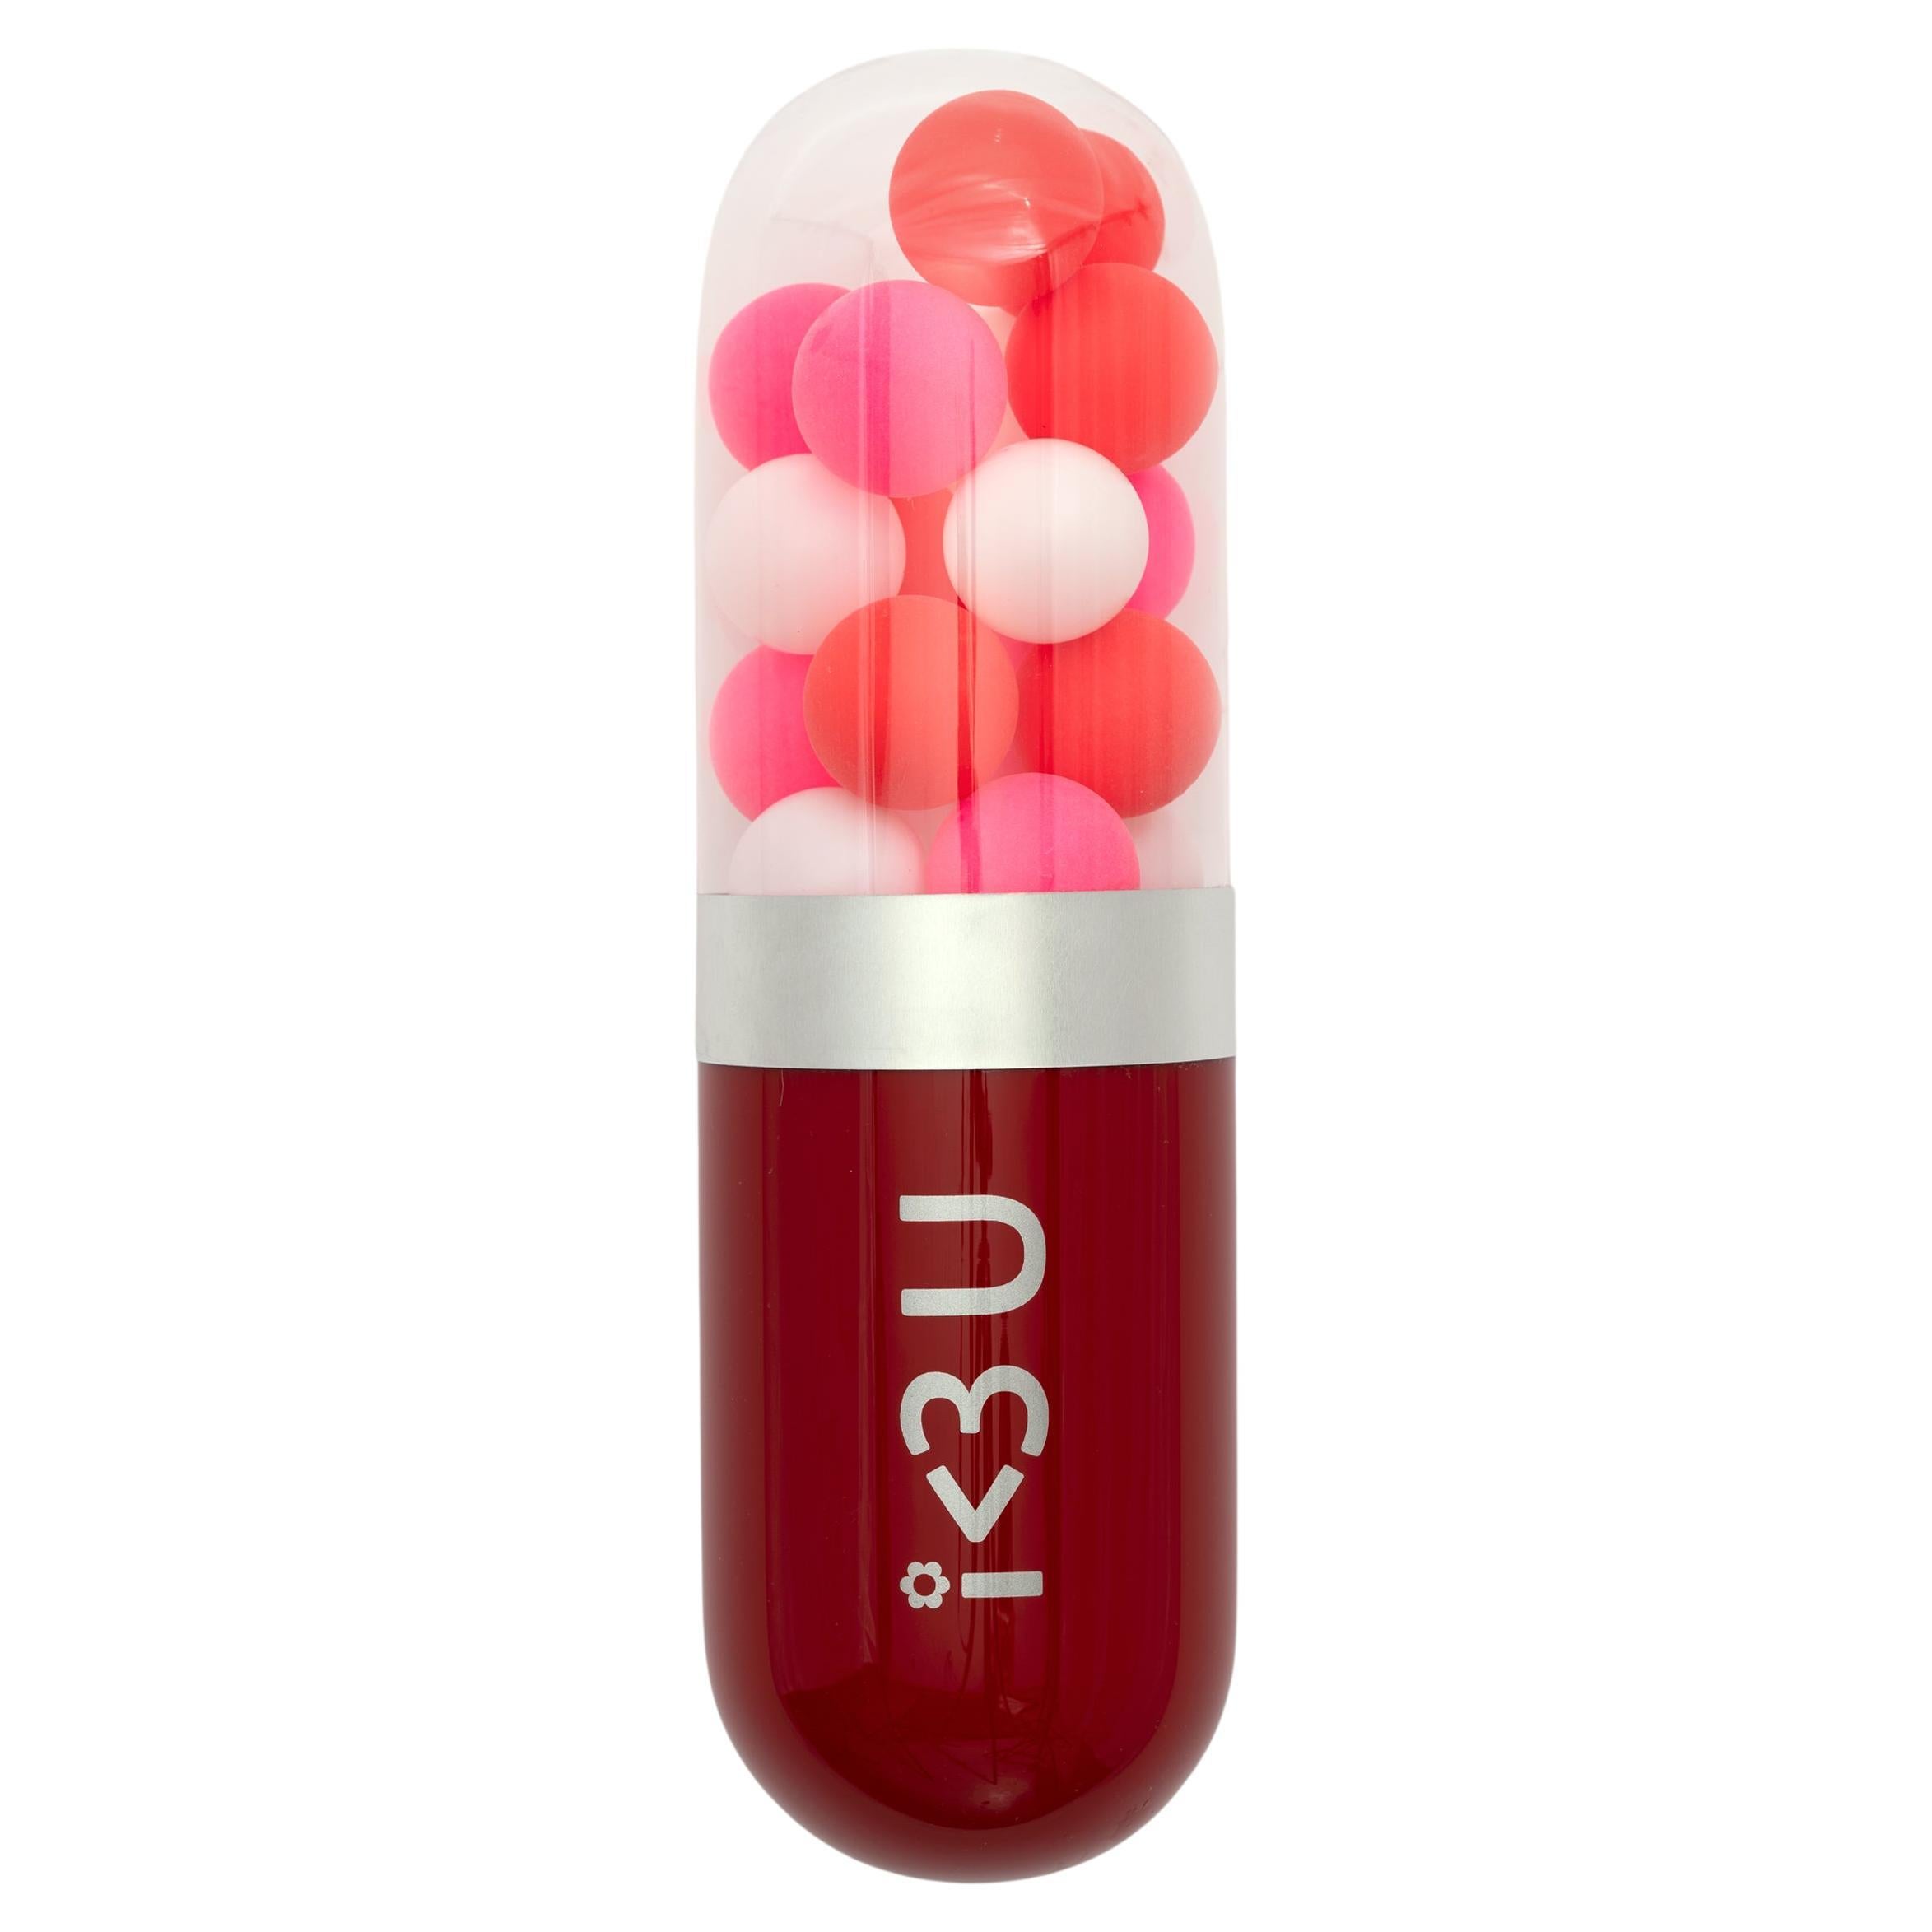 I <3 U (I Love You) - Sculpture murale en pilules de verre rouge